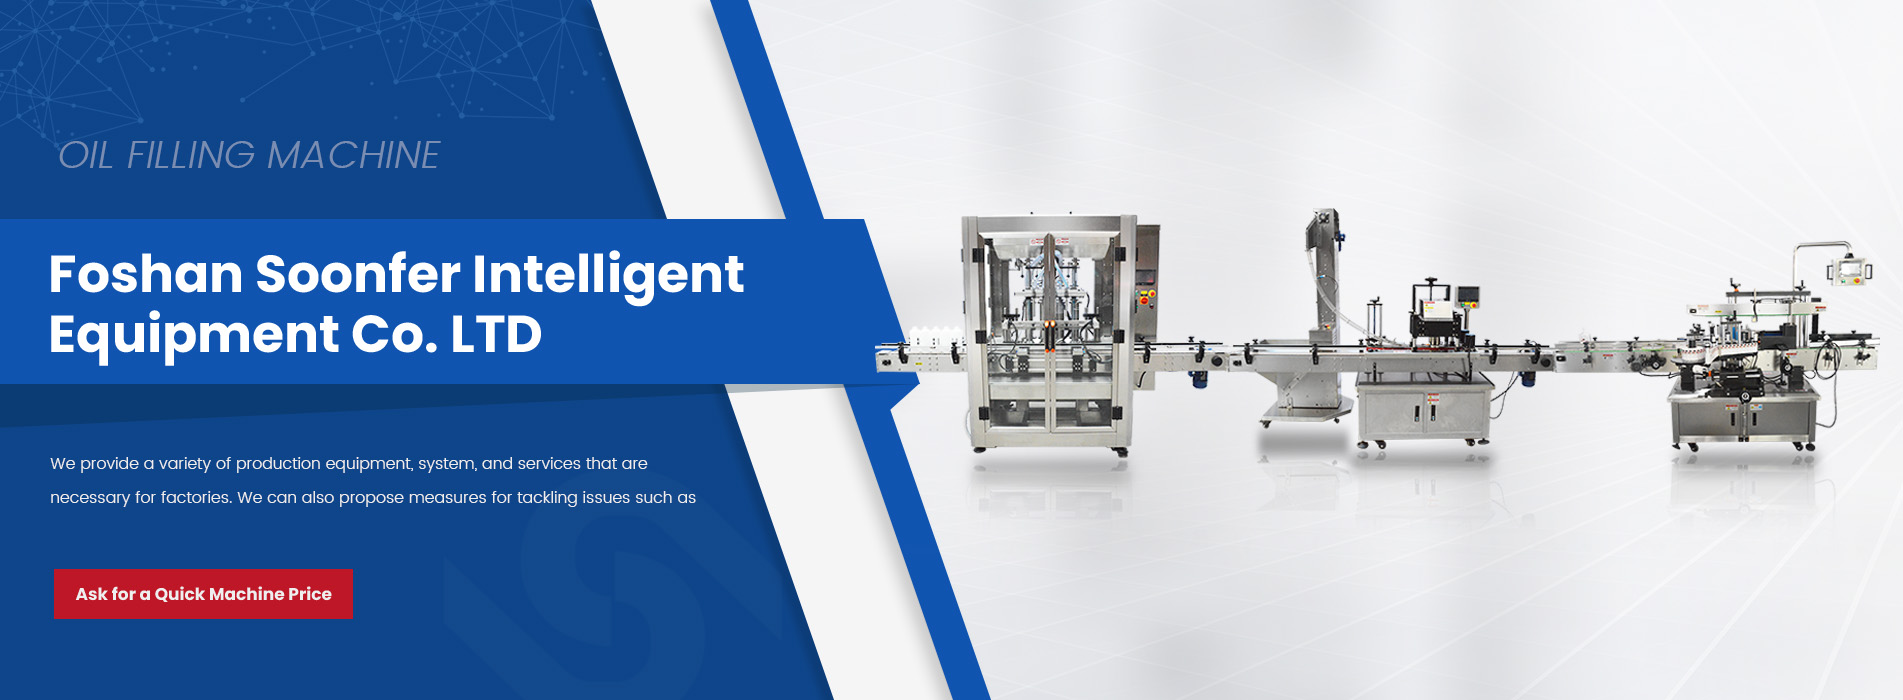 Foshan Soonfer Intelligent Equipment Co., Ltd. Main Image